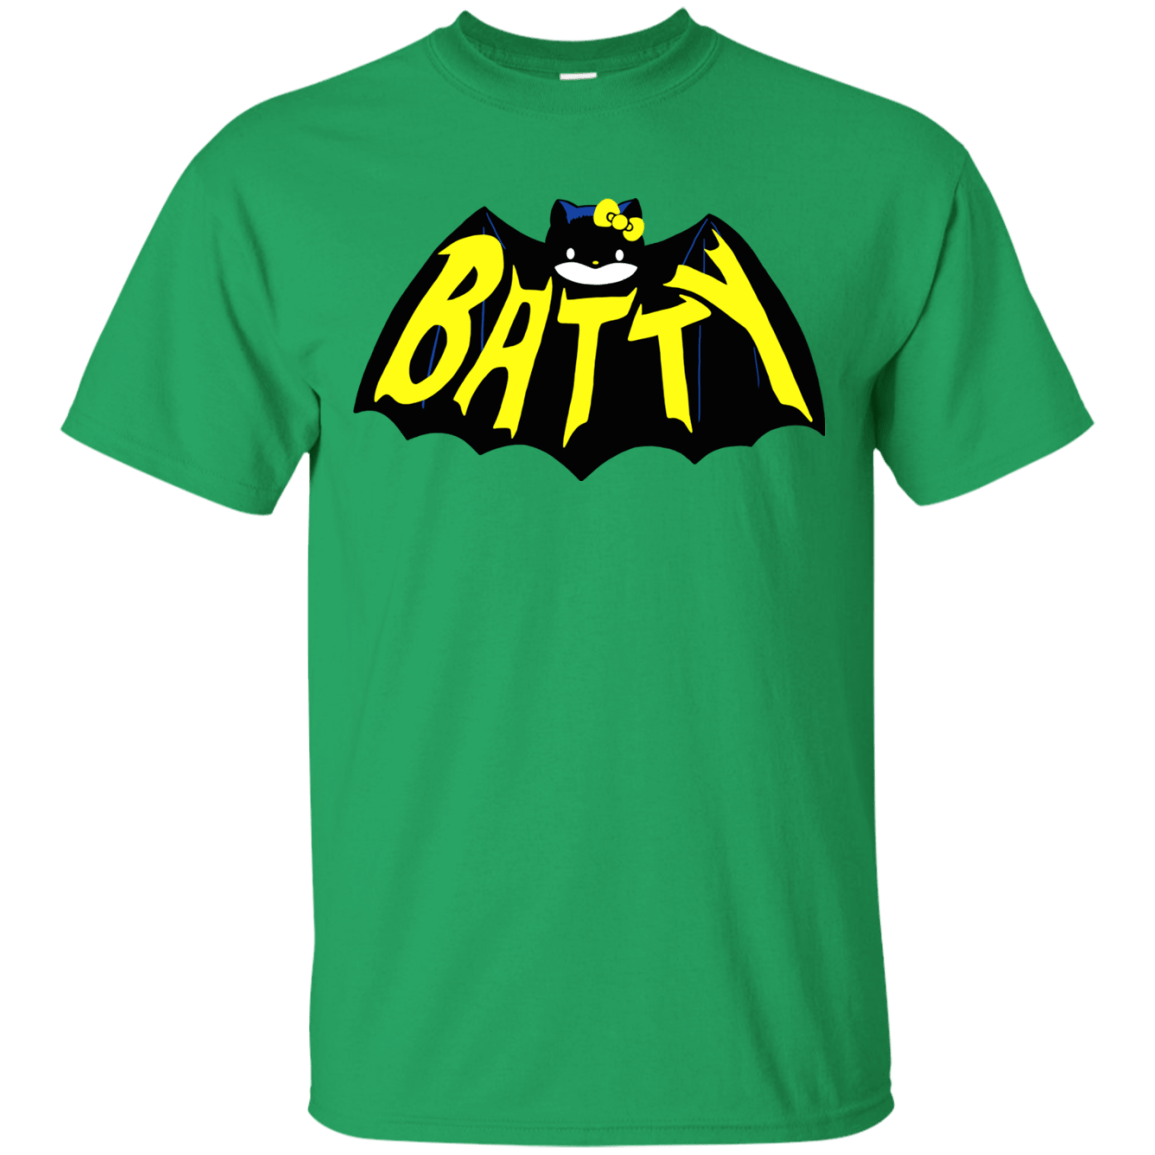 T-Shirts Irish Green / S Hello Batty T-Shirt